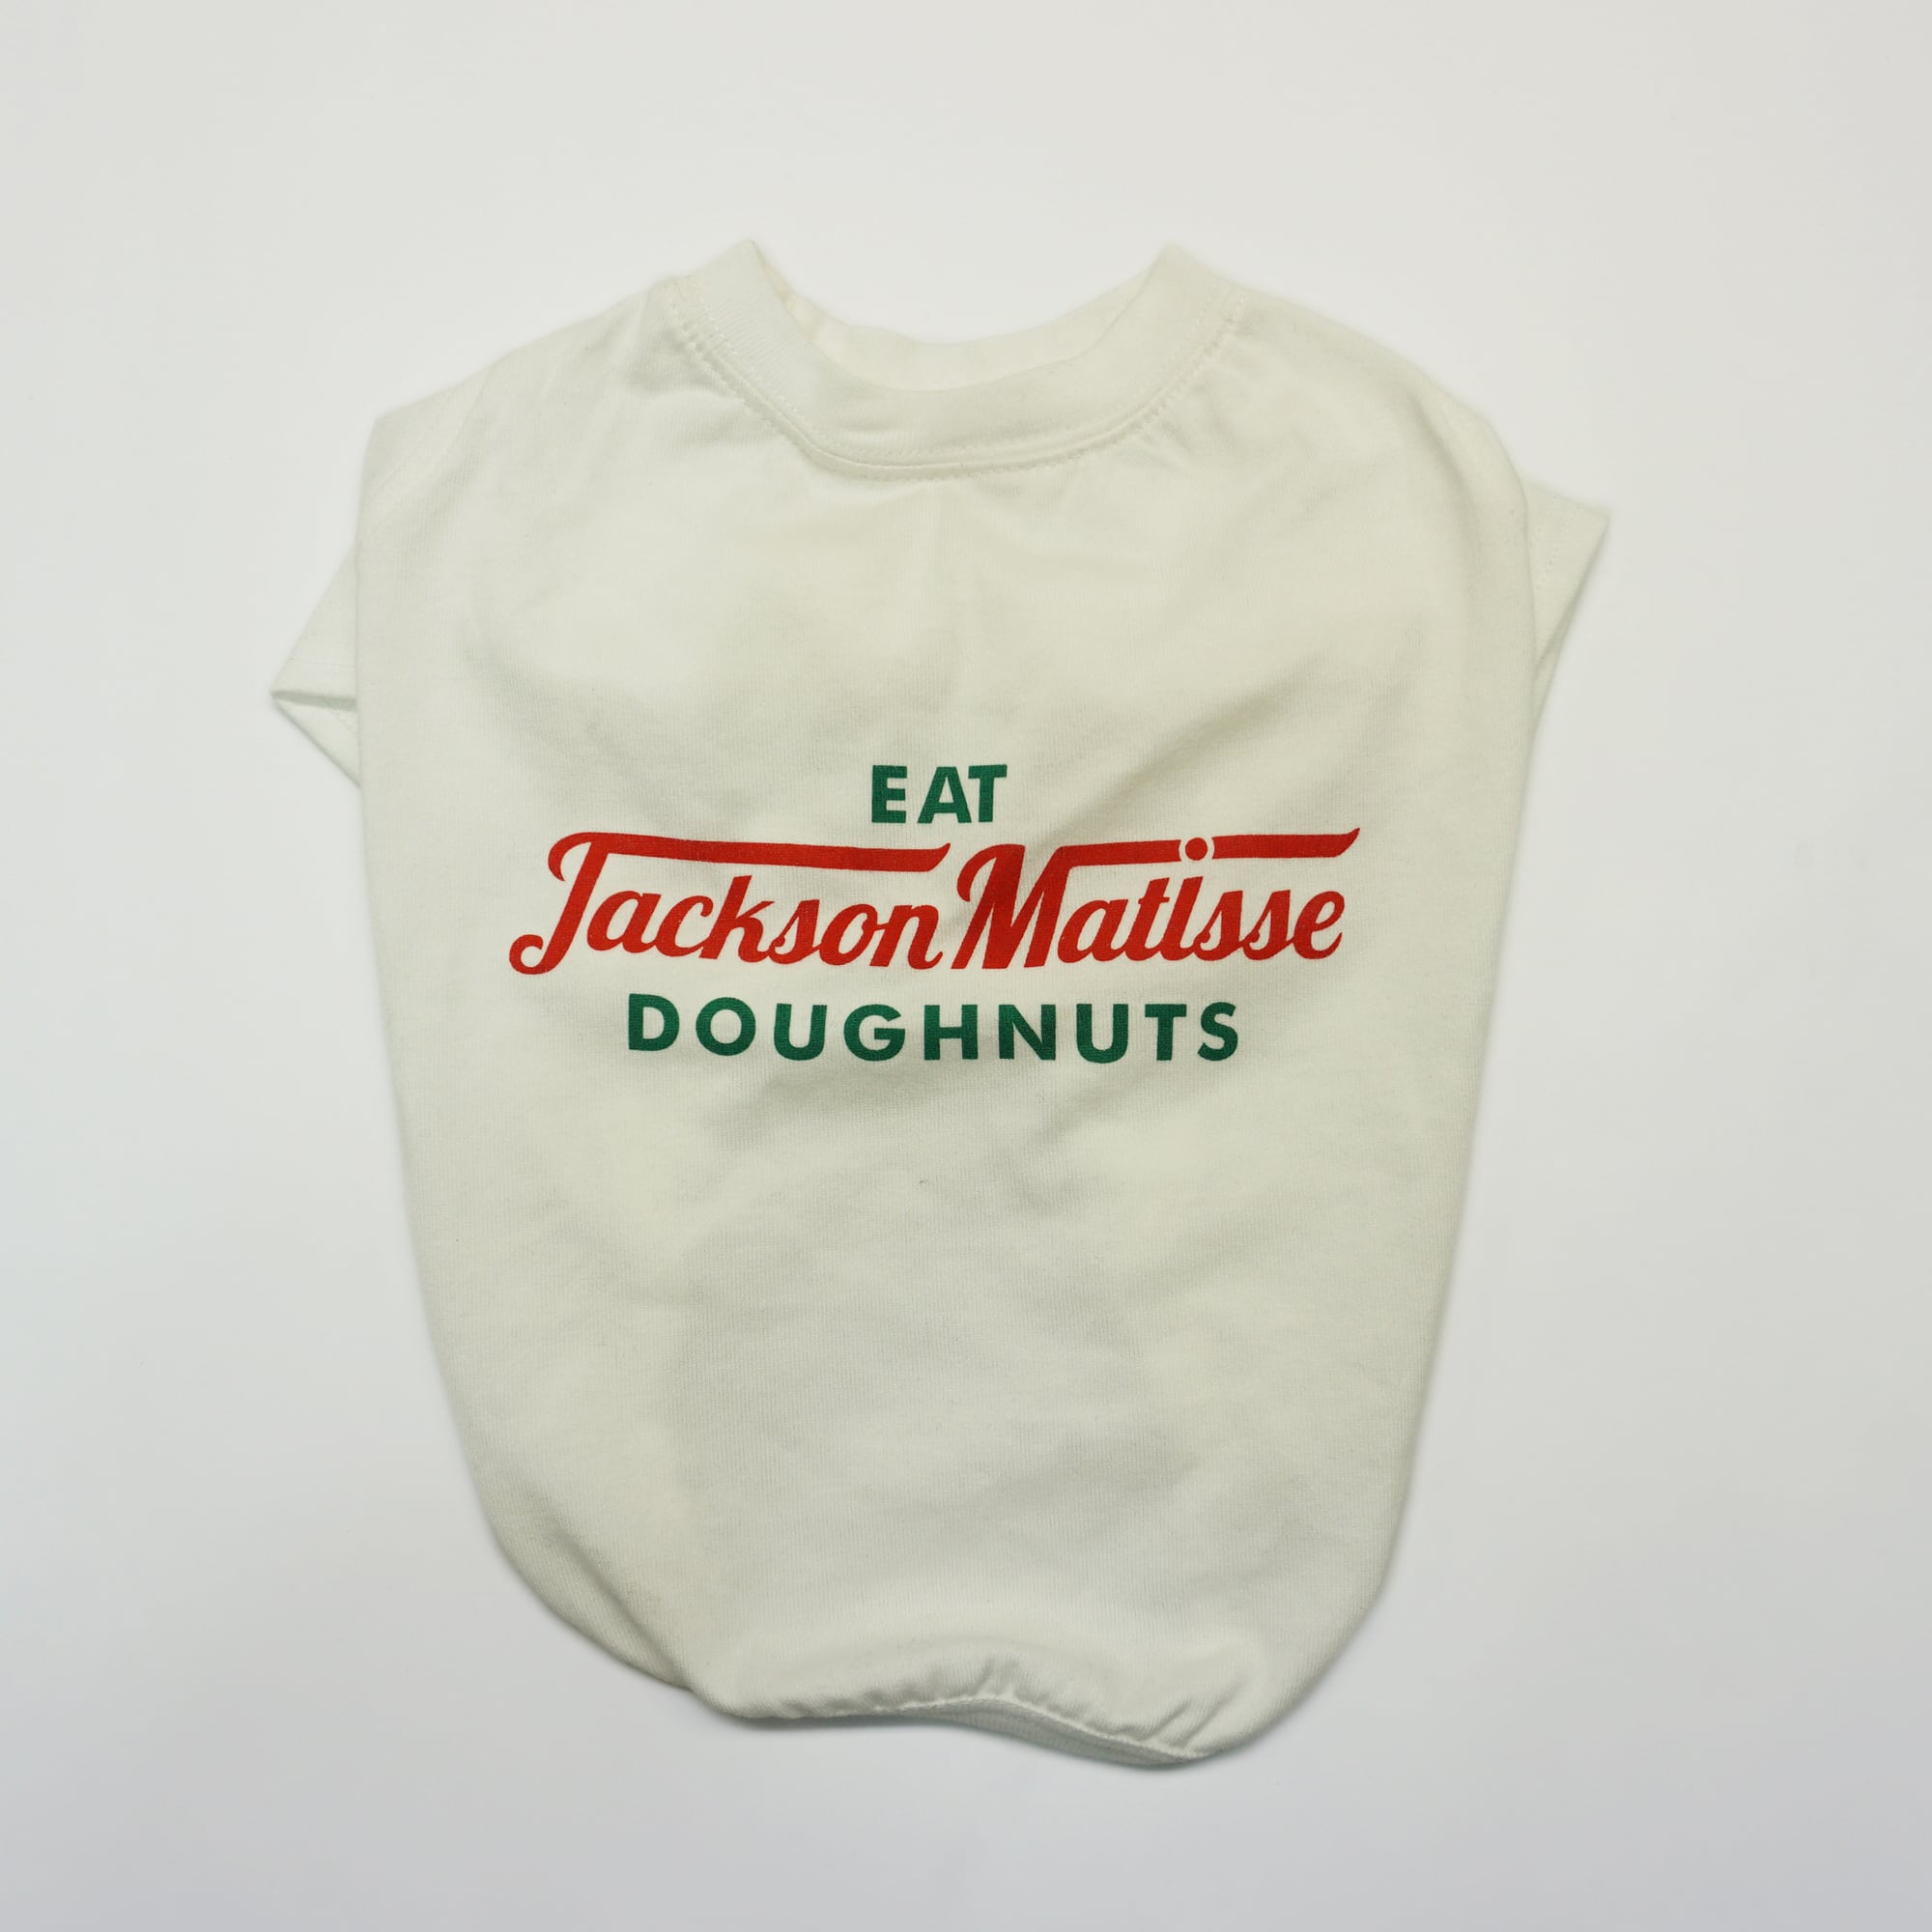 EAT Jackson Matisse DOUGHNUTS Tee